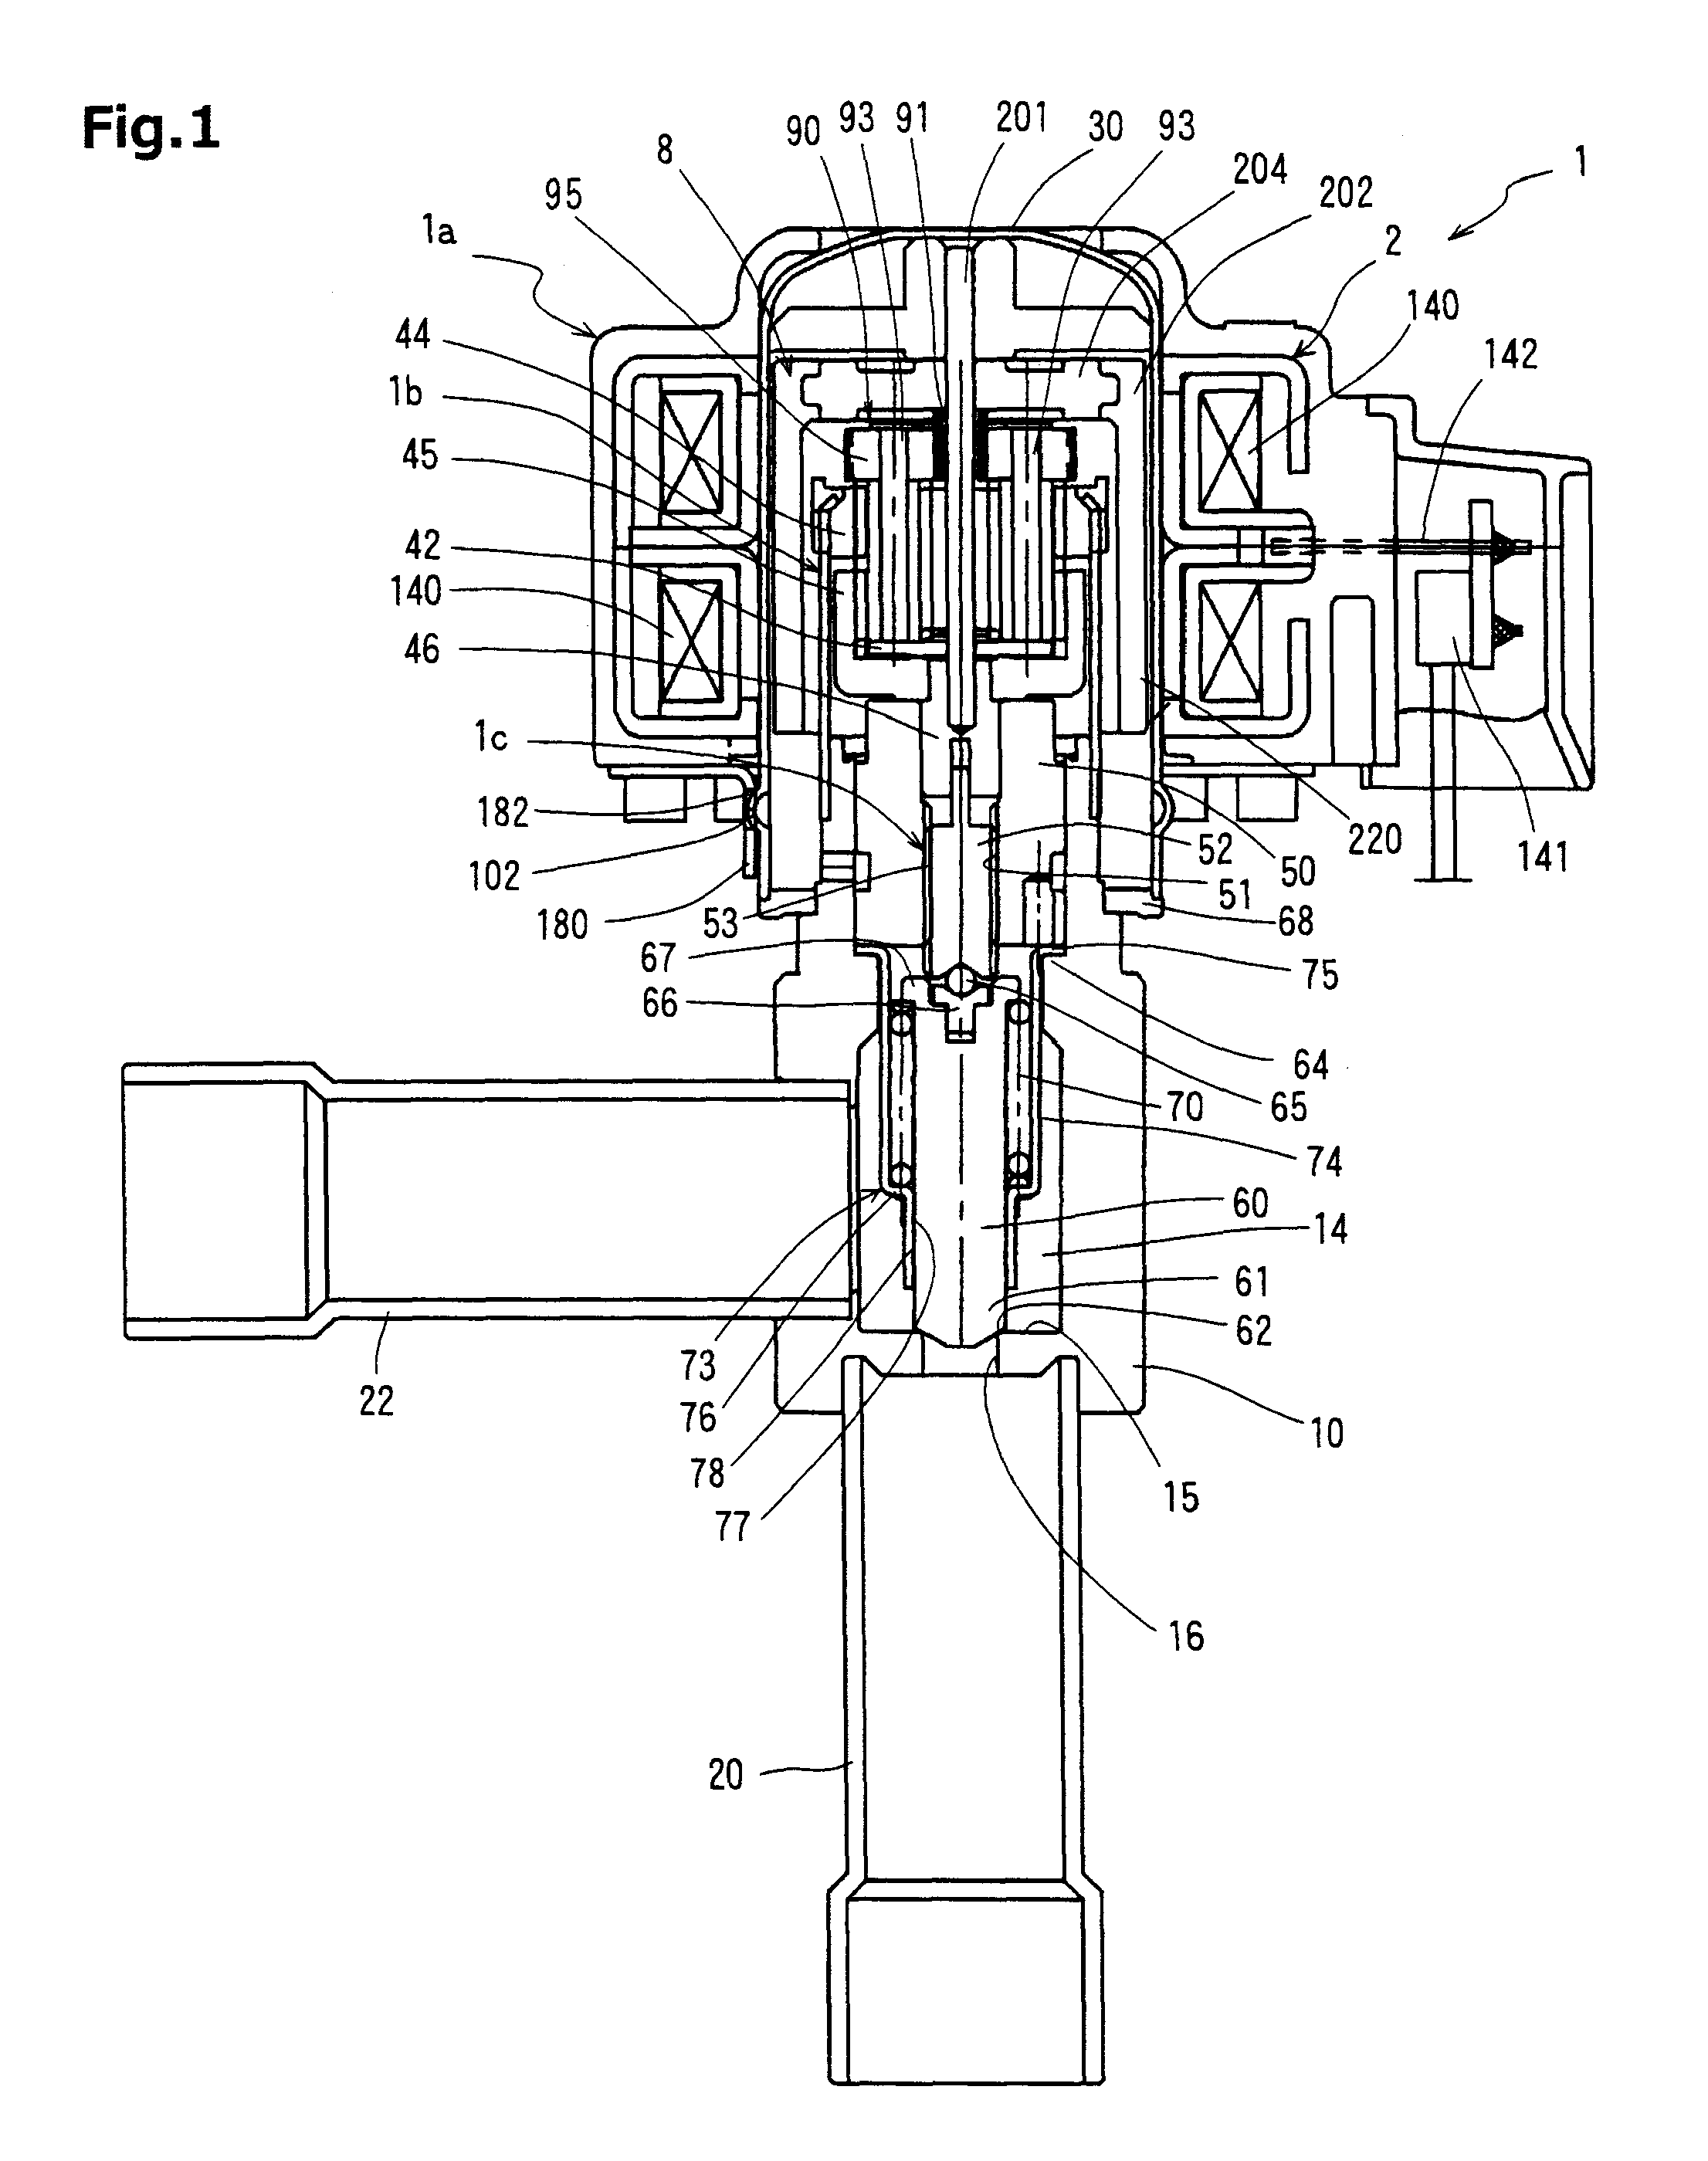 Motor operated valve